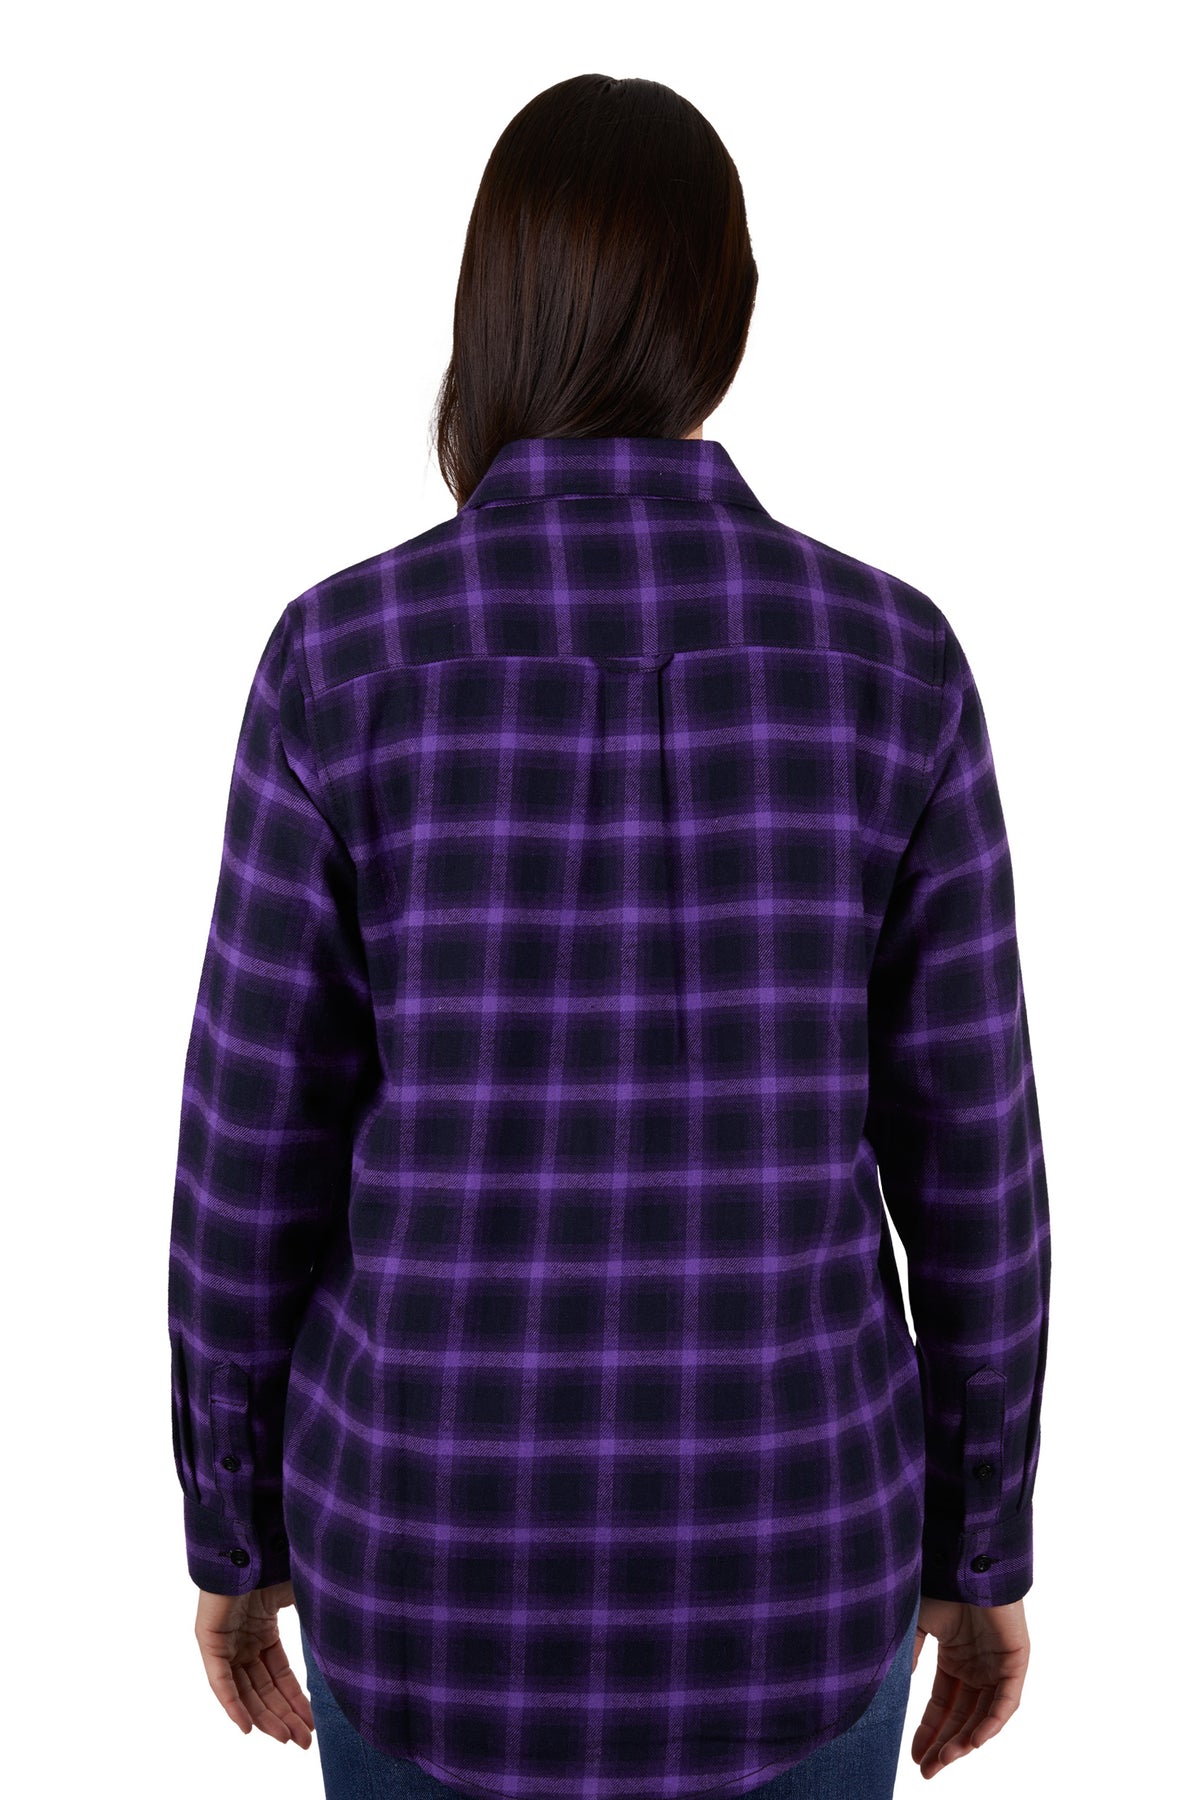 Thomas Cook Womens Nicole Thermal Shirt - Navy/Purple